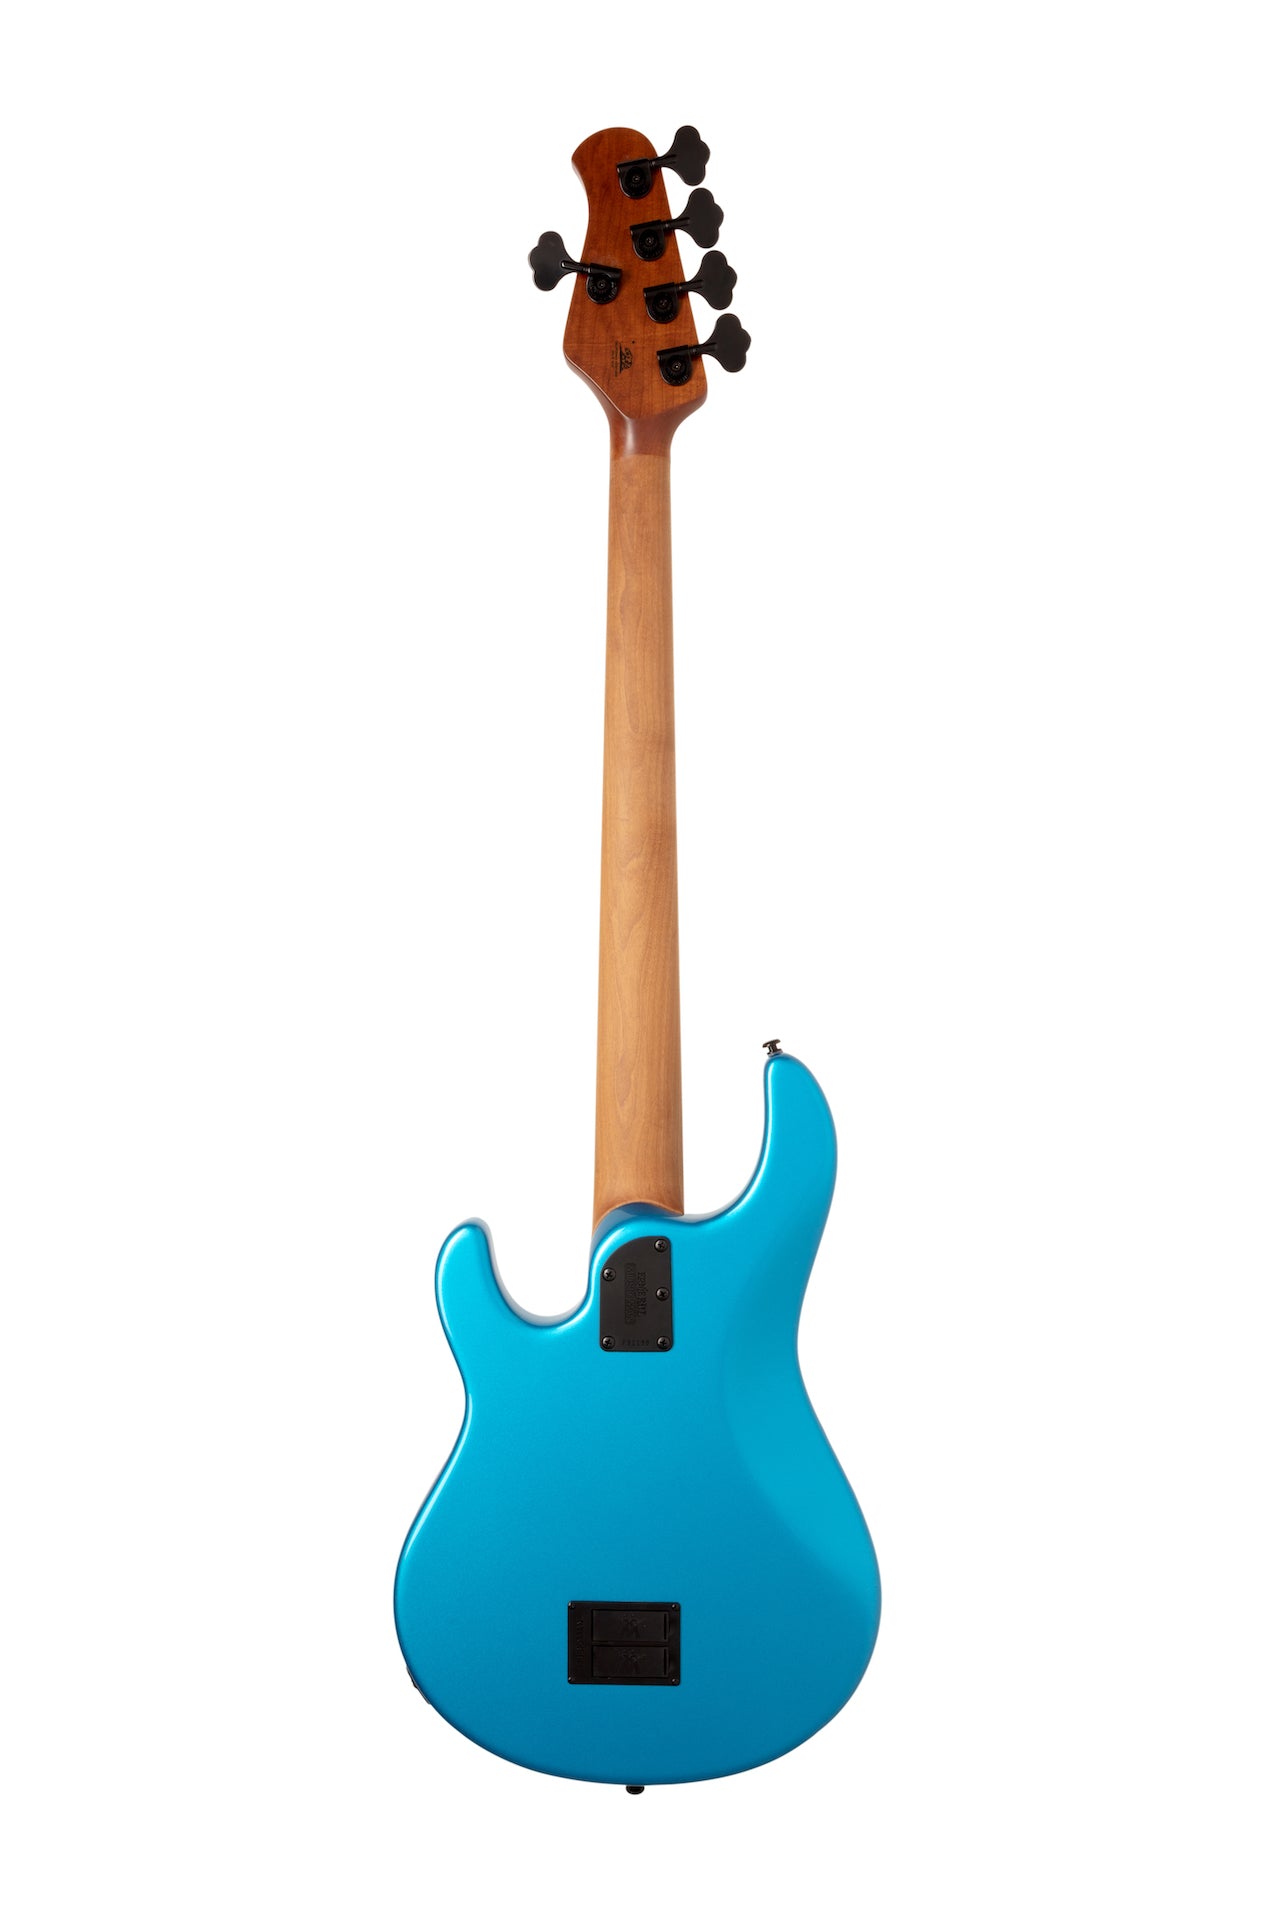 Ernie Ball Music Man StingRay Special 5 Bass Guitar - Speed Blue with Rosewood Fingerboard F96541 - HIENDGUITAR   Musicman bass